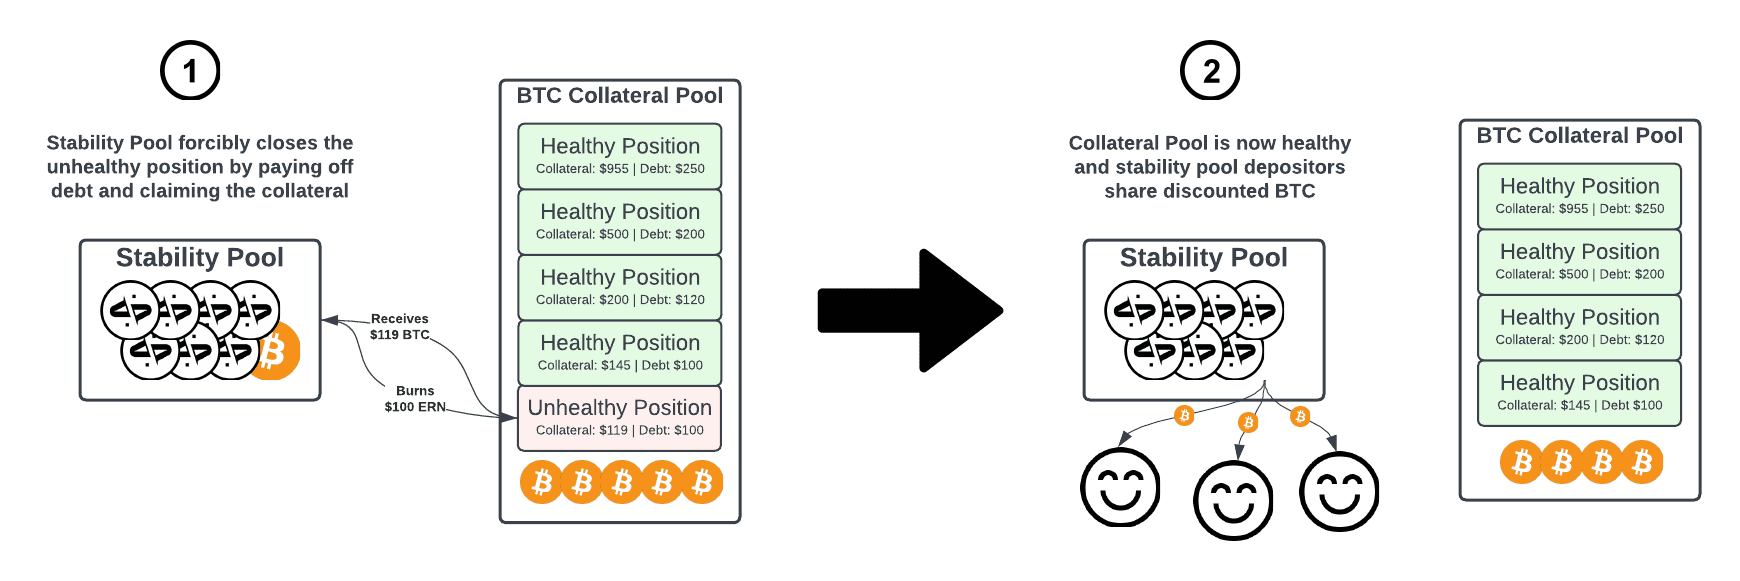 Ethos Documentation Stability Pool Liquidations